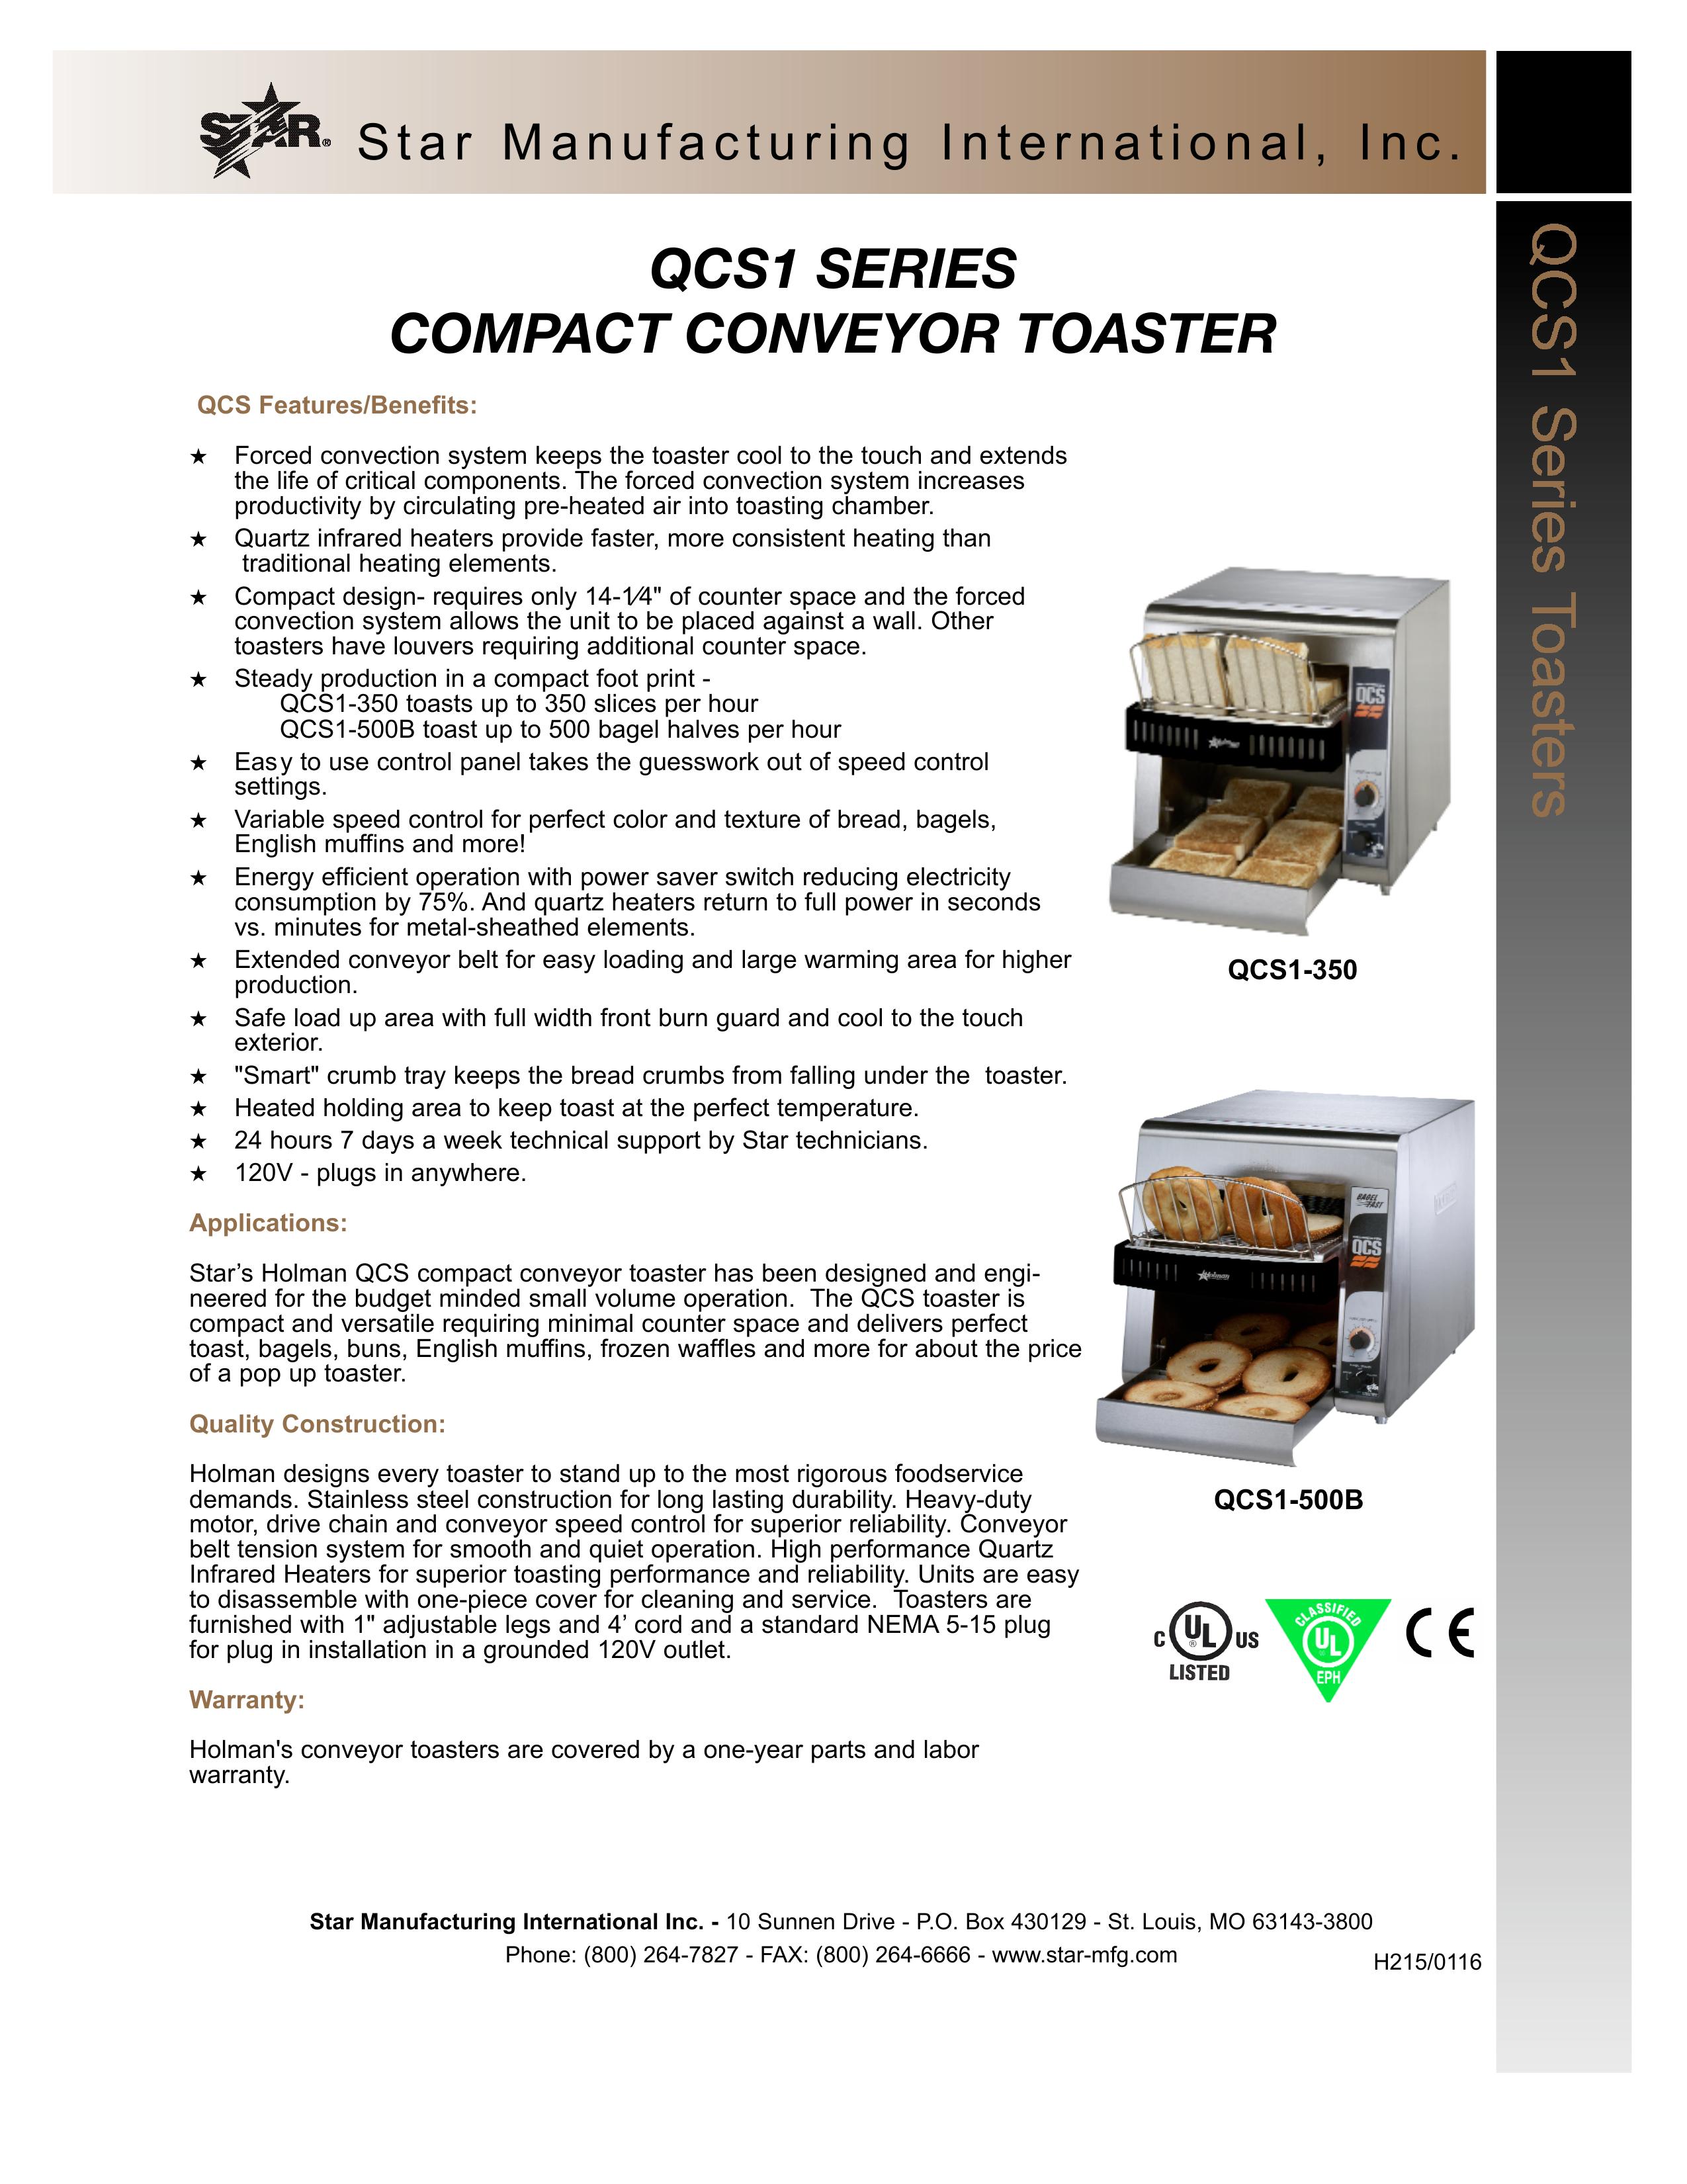 Star Manufacturing QCS1 SERIES Toaster User Manual